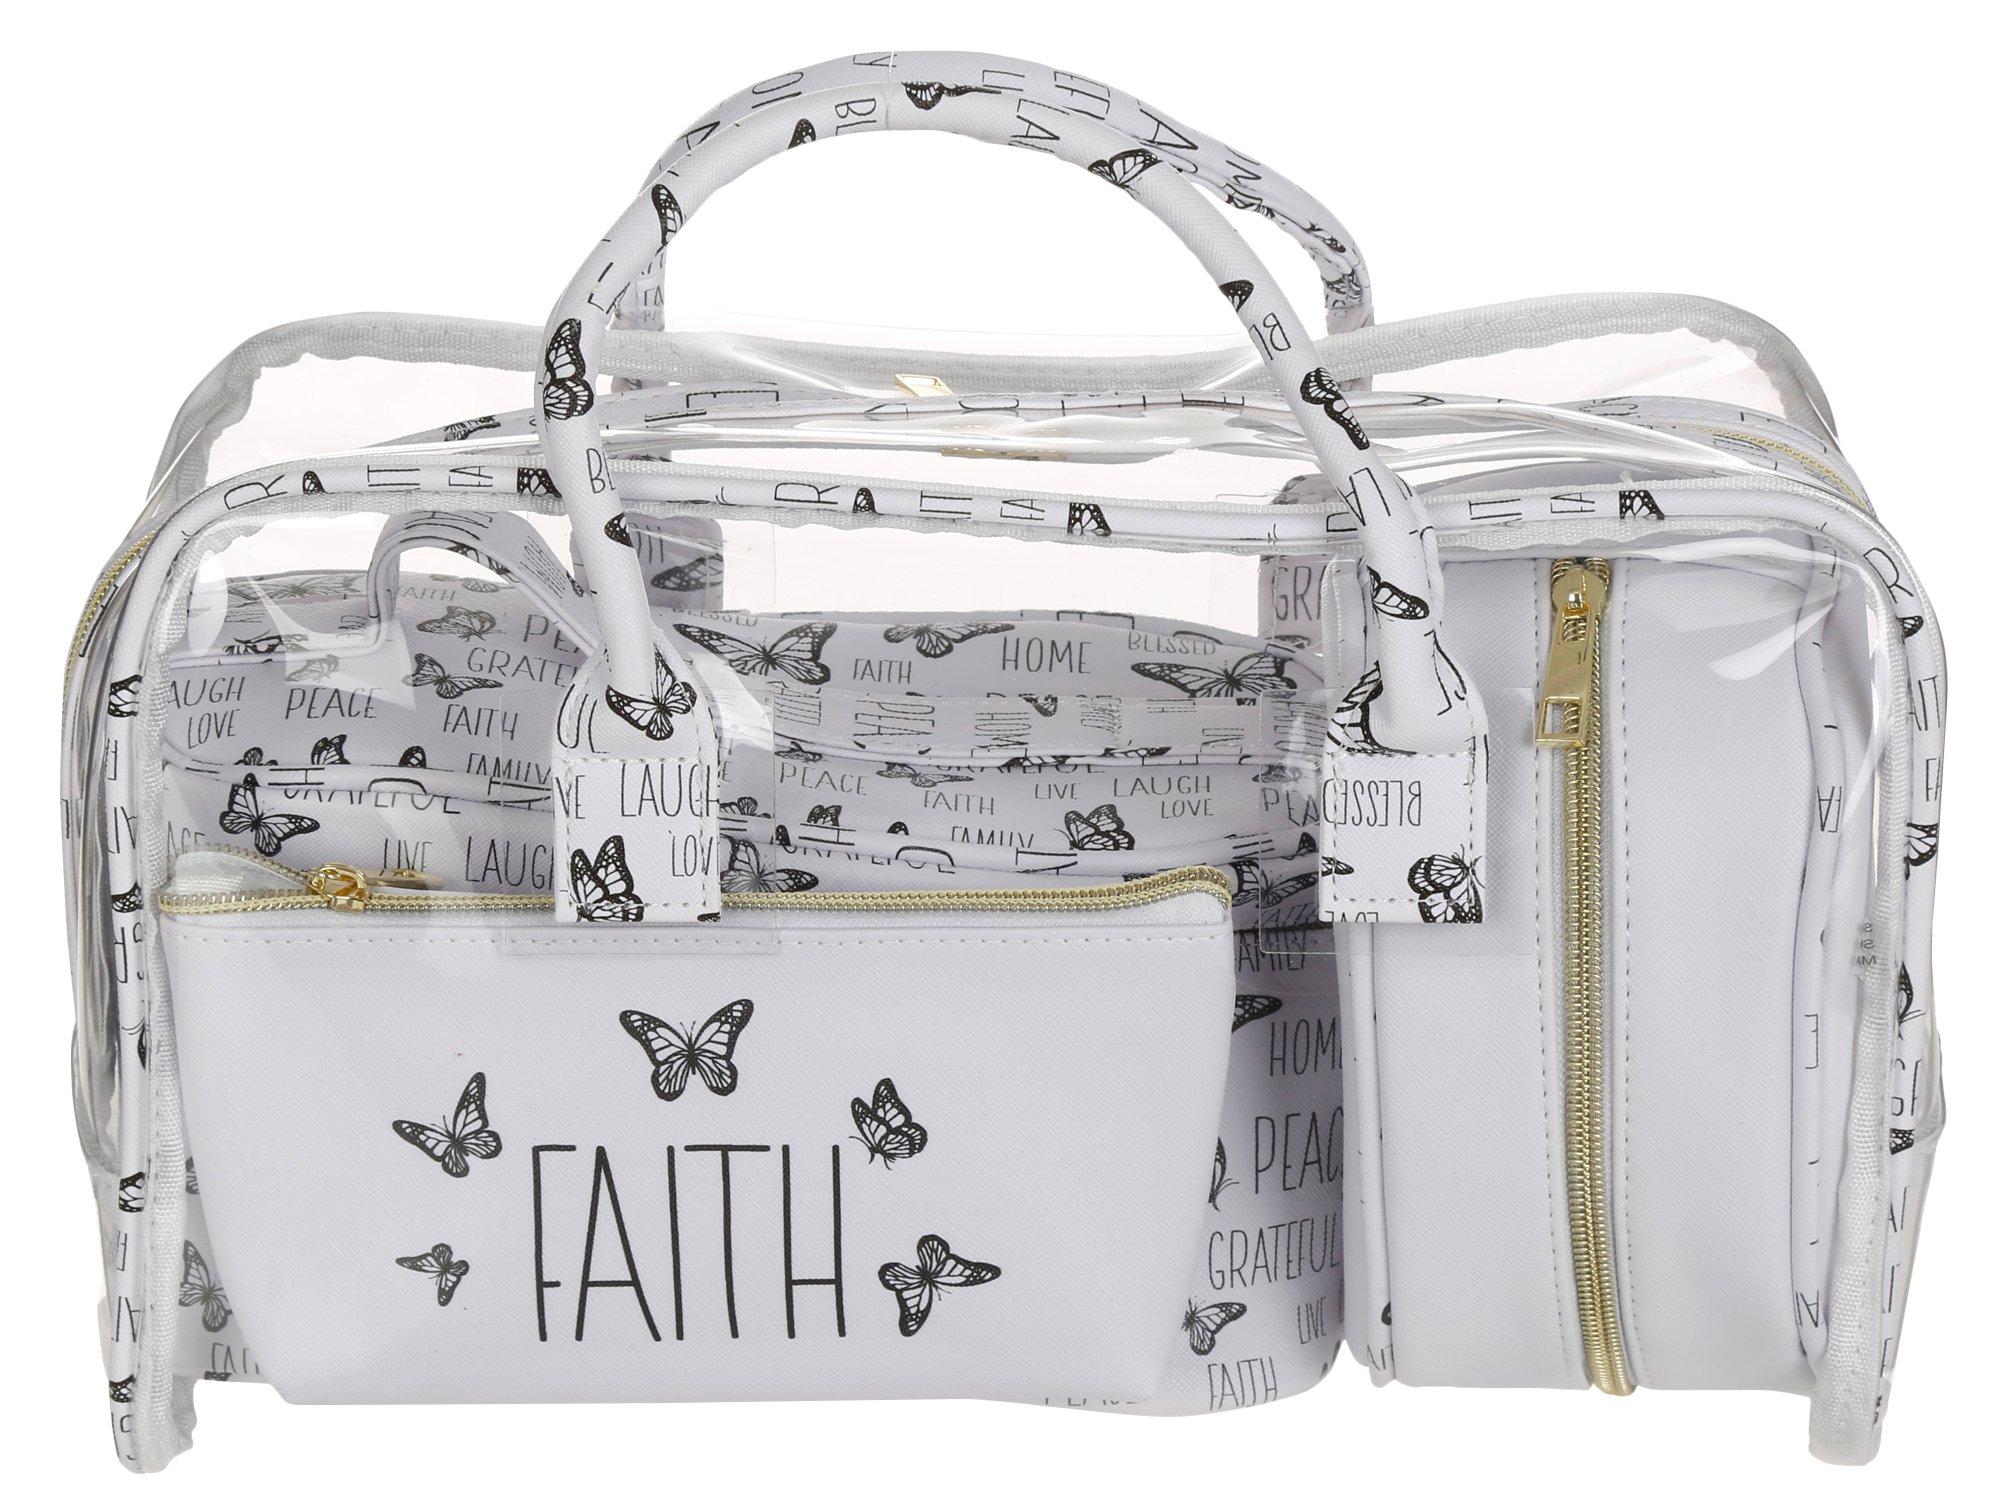 4 Pc Faith Cosmetic Bags